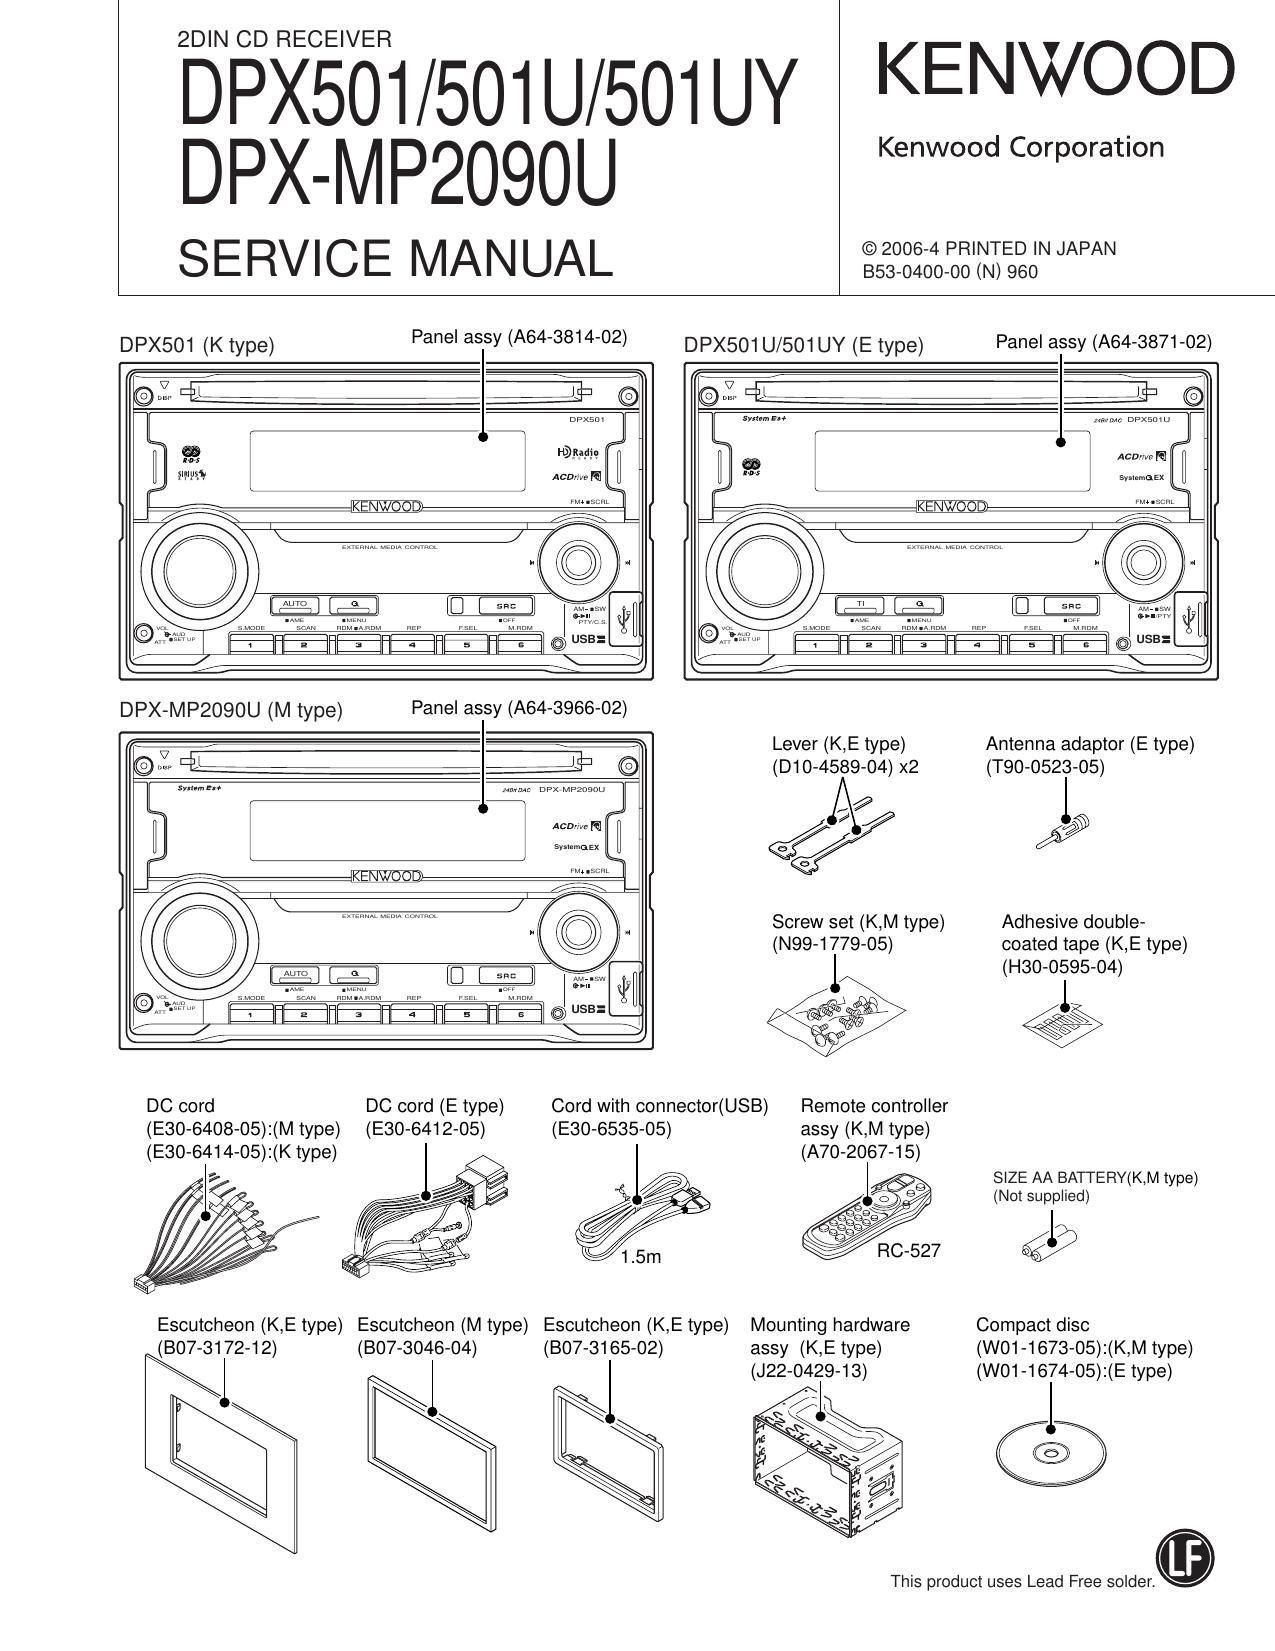 Kenwood DPX 501 Service Manual